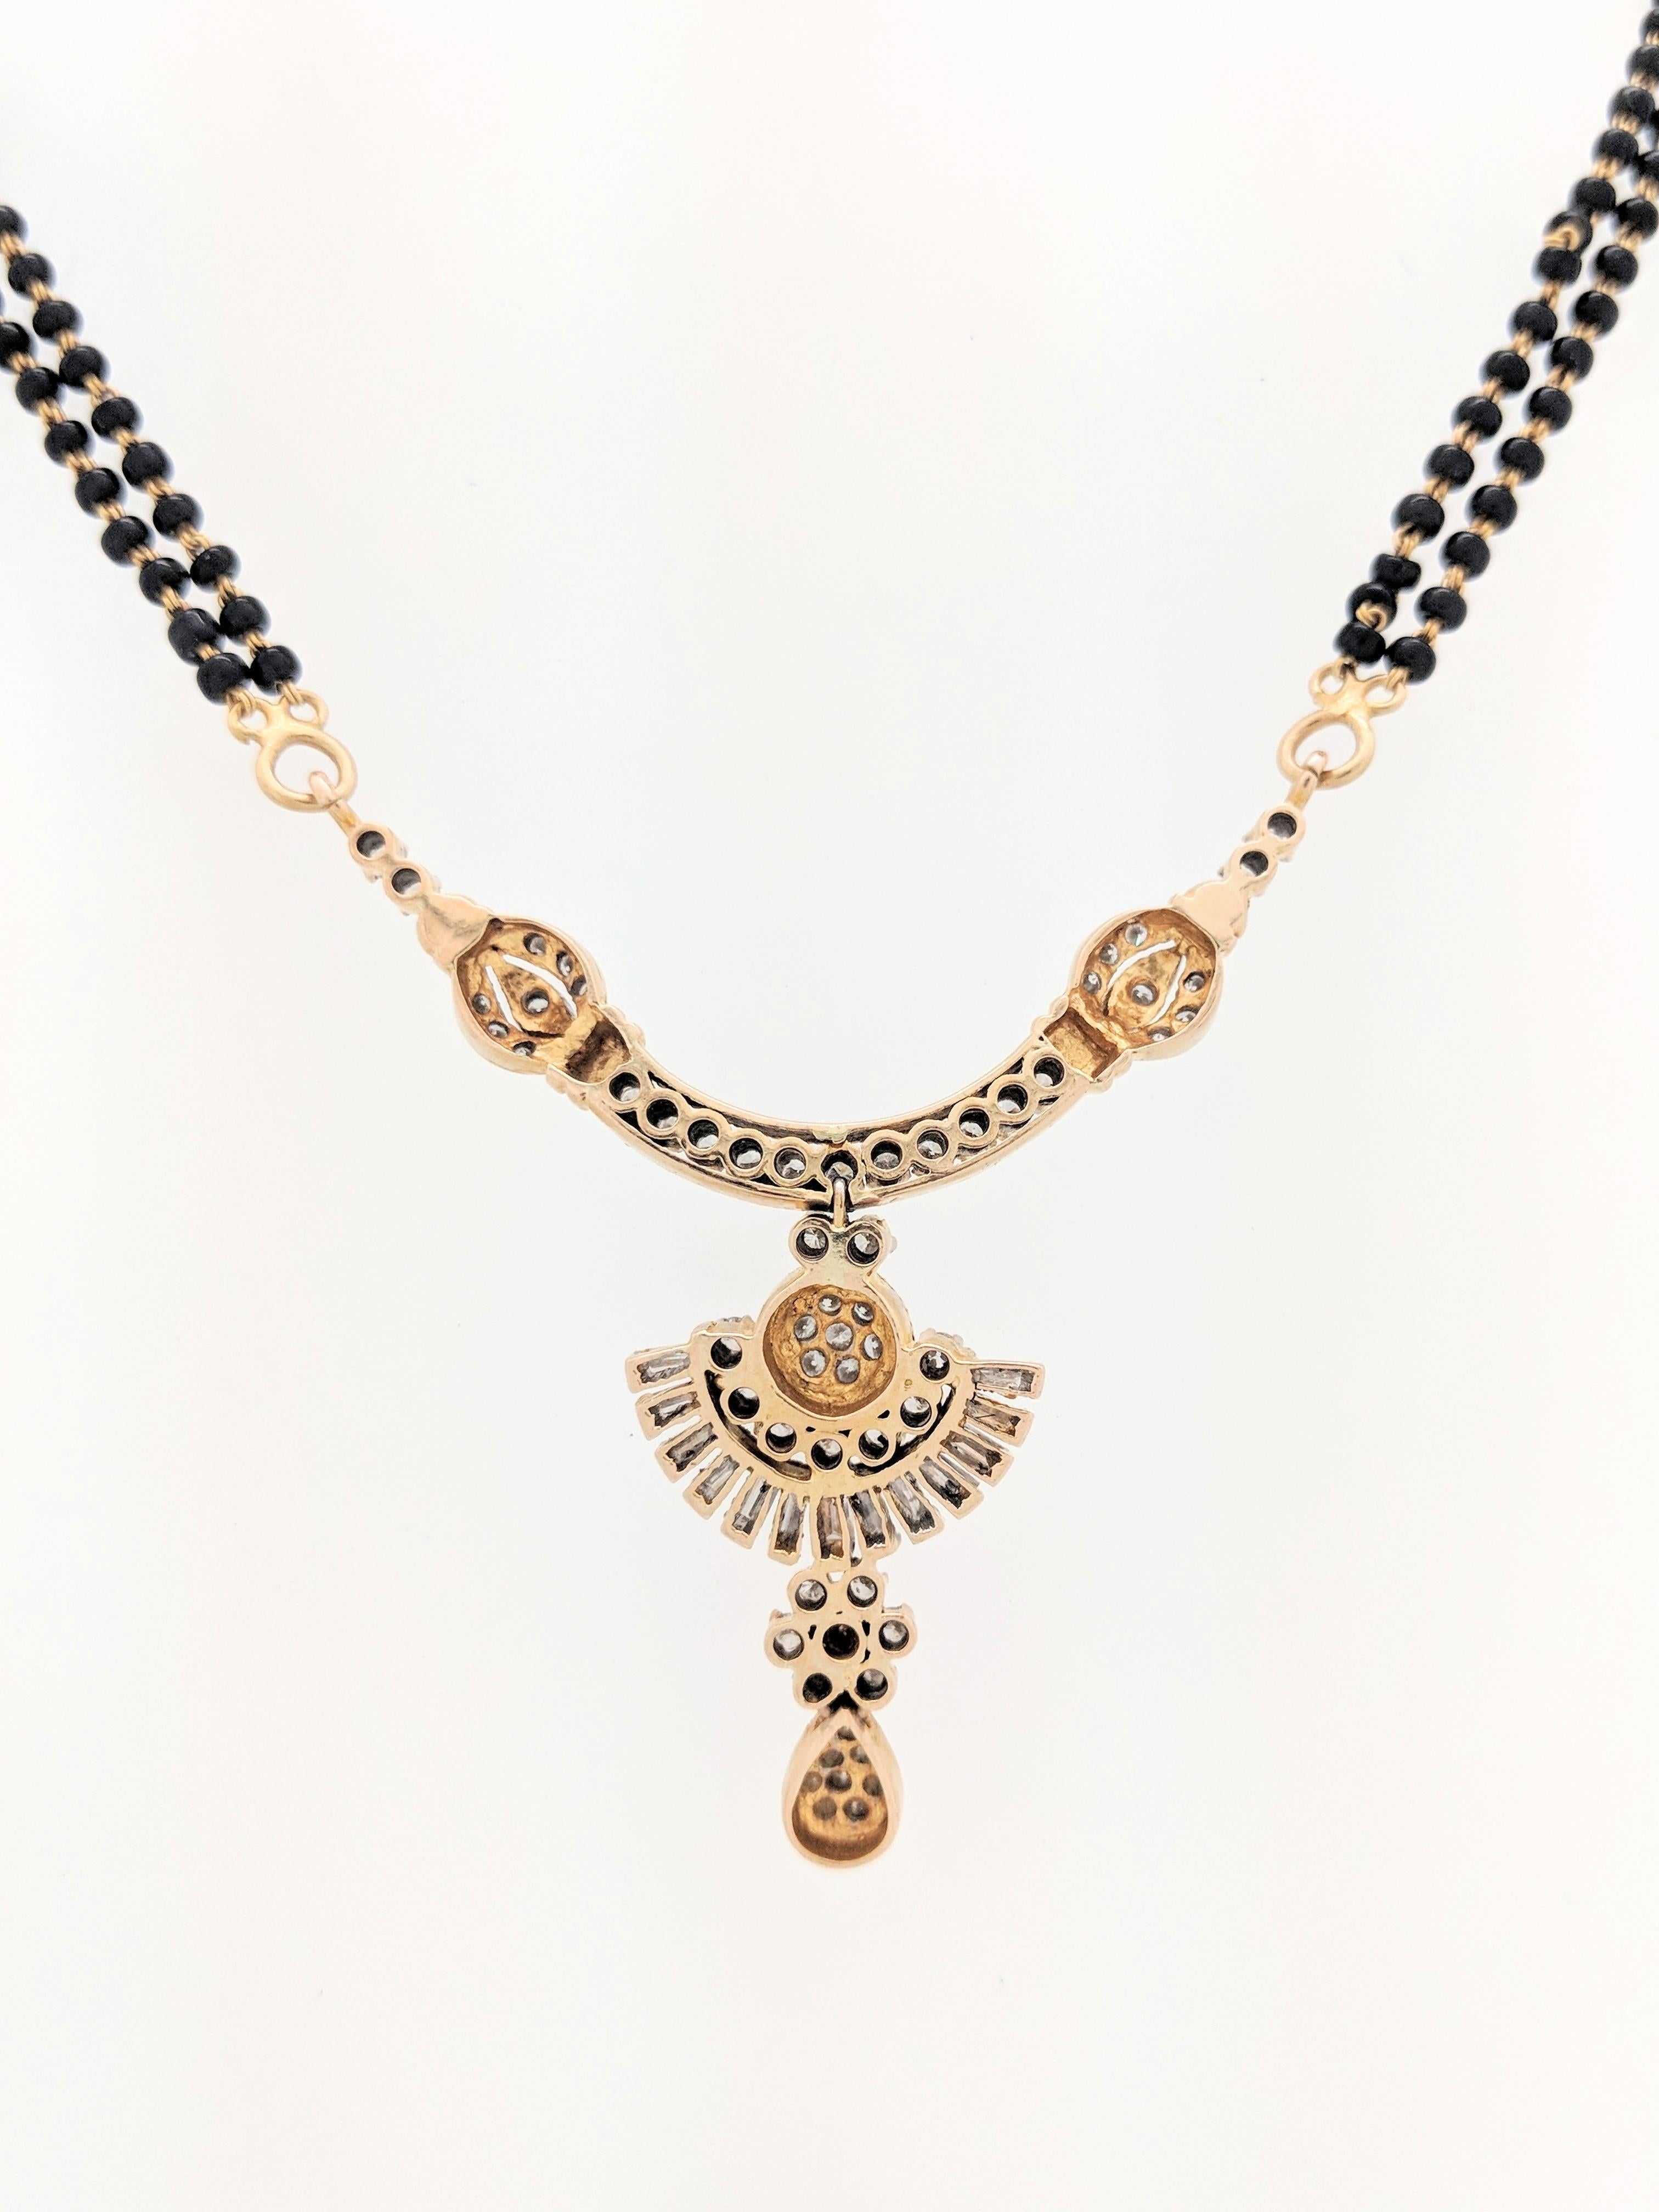 Women's 22 Karat Gold Handmade Mangalsutra Necklace Indian Bridal Jewelry with Diamonds